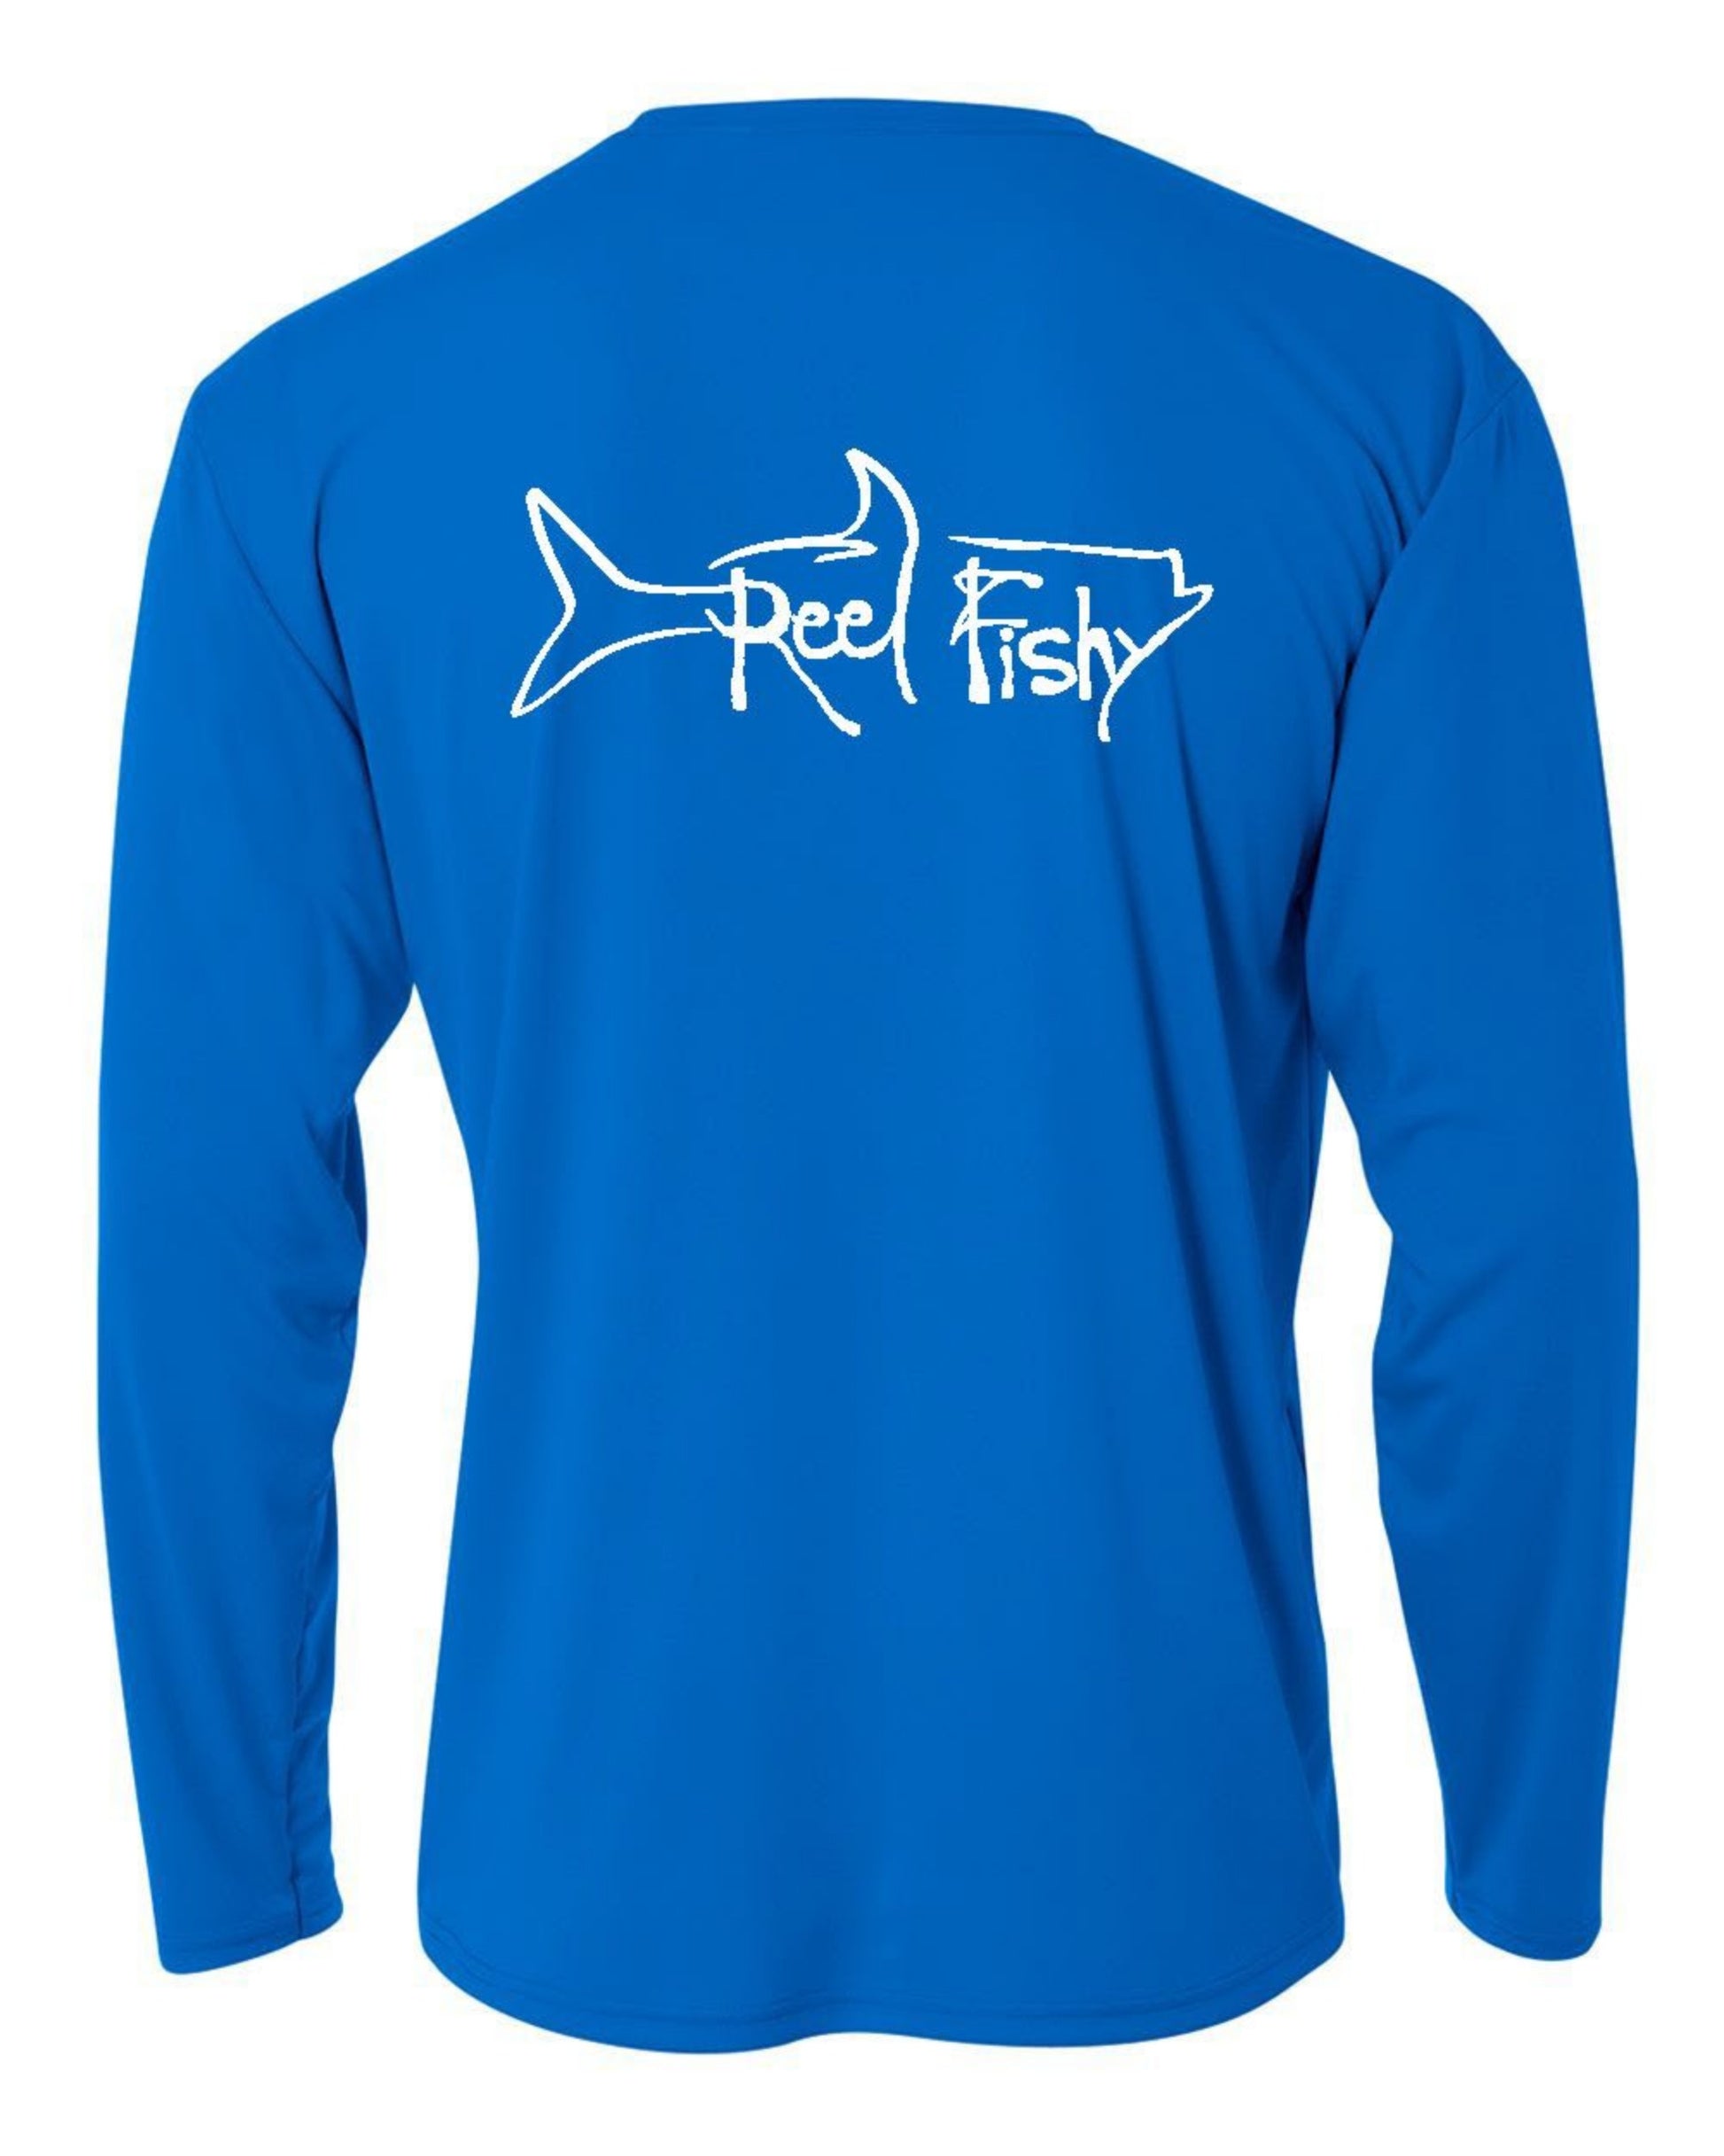 Youth Performance Dry-Fit Tarpon Fishing Shirts 50+Upf Sun Protection - Reel Fishy Apparel L / Royal L/S